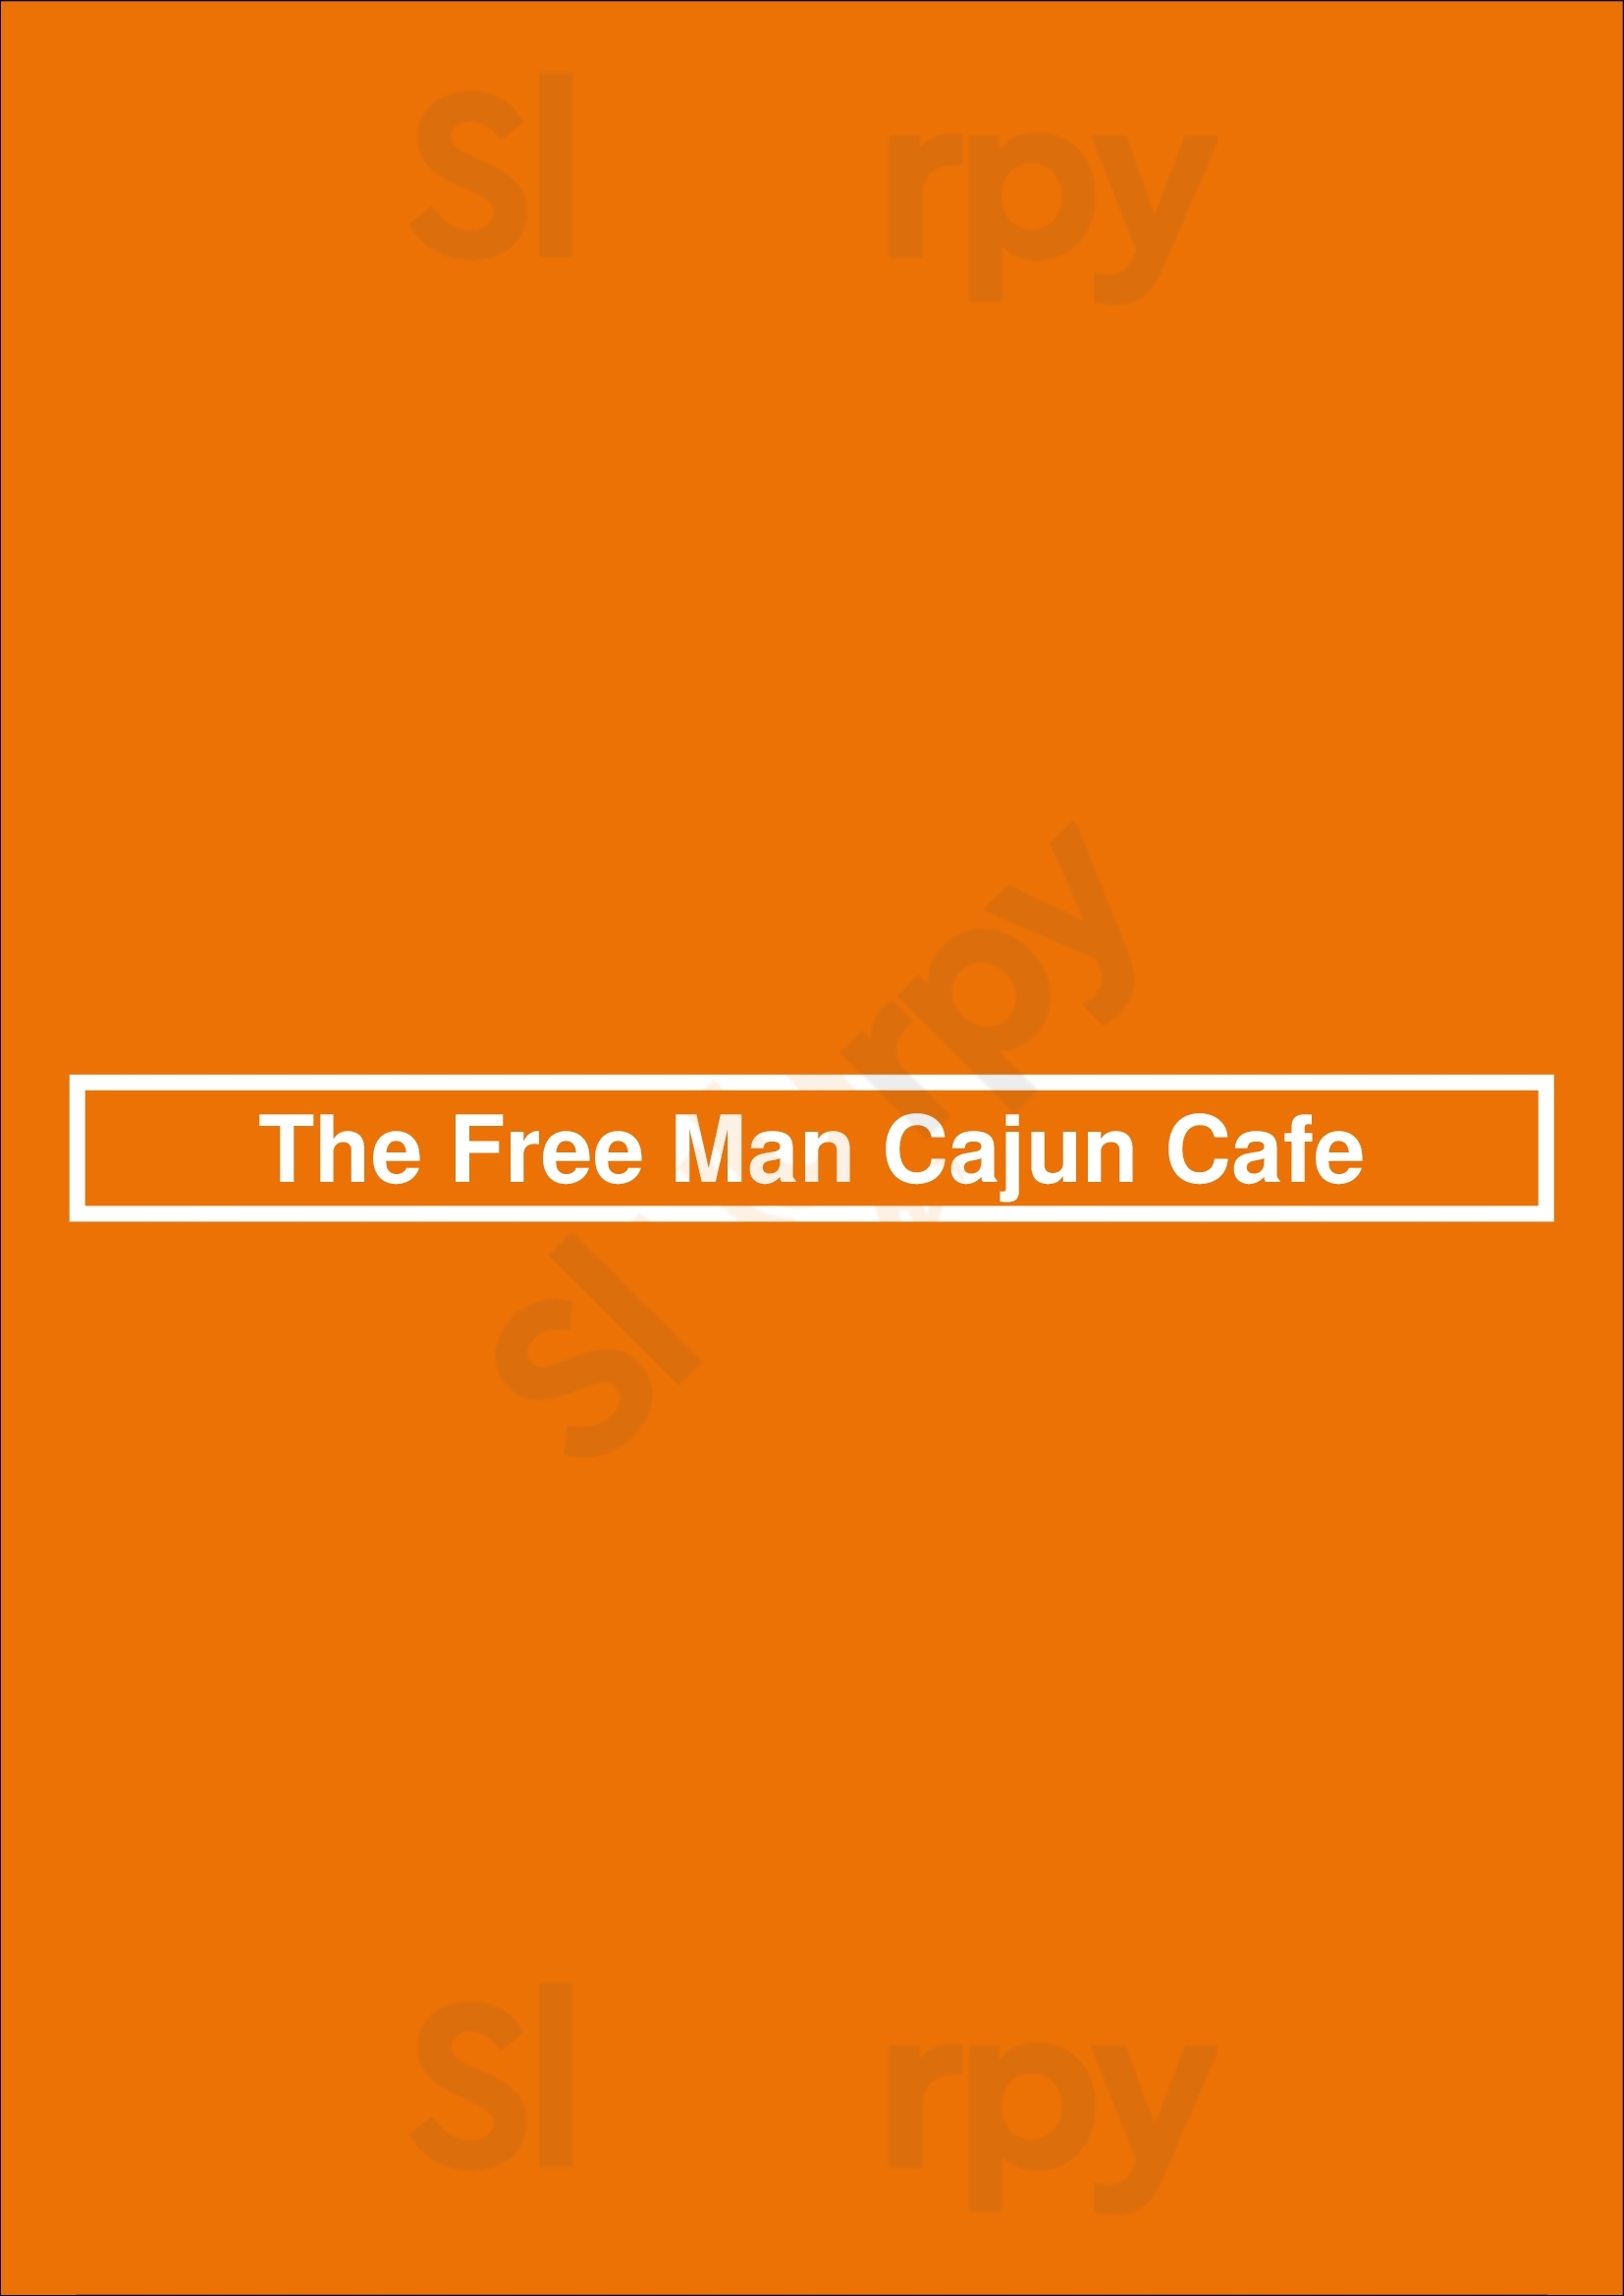 The Free Man Cajun Cafe Dallas Menu - 1